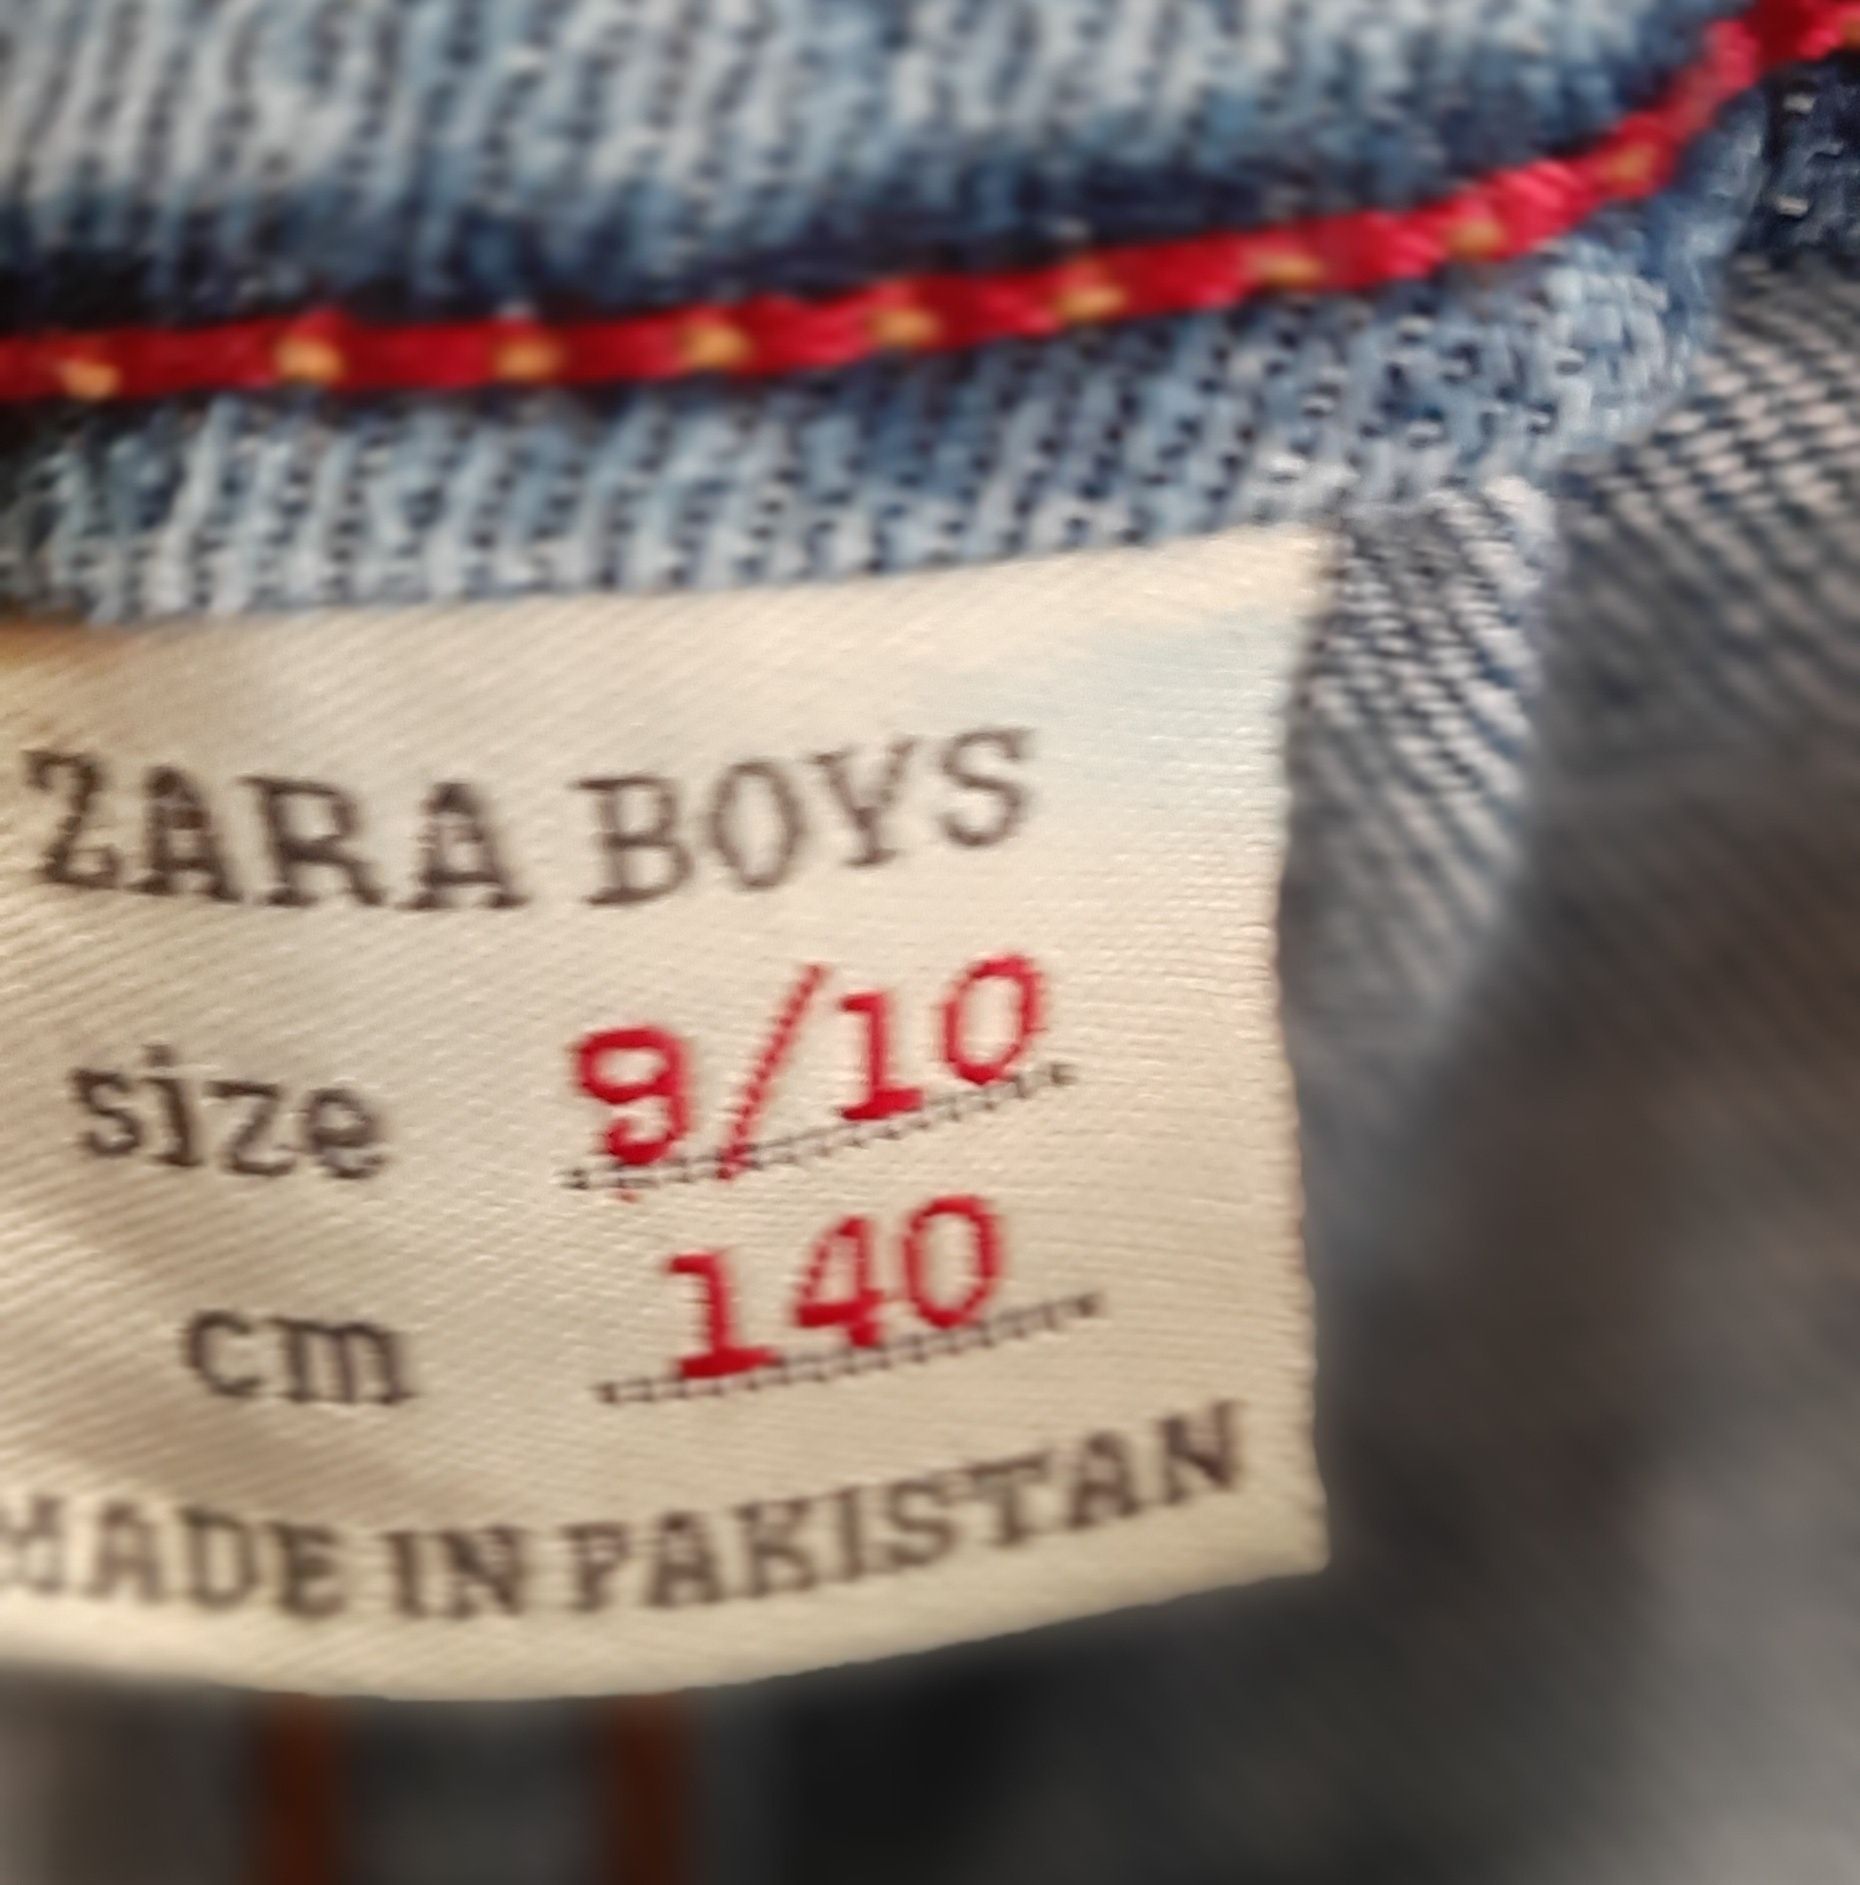 Blugi Zara Boys 9-10 ani 140 cm